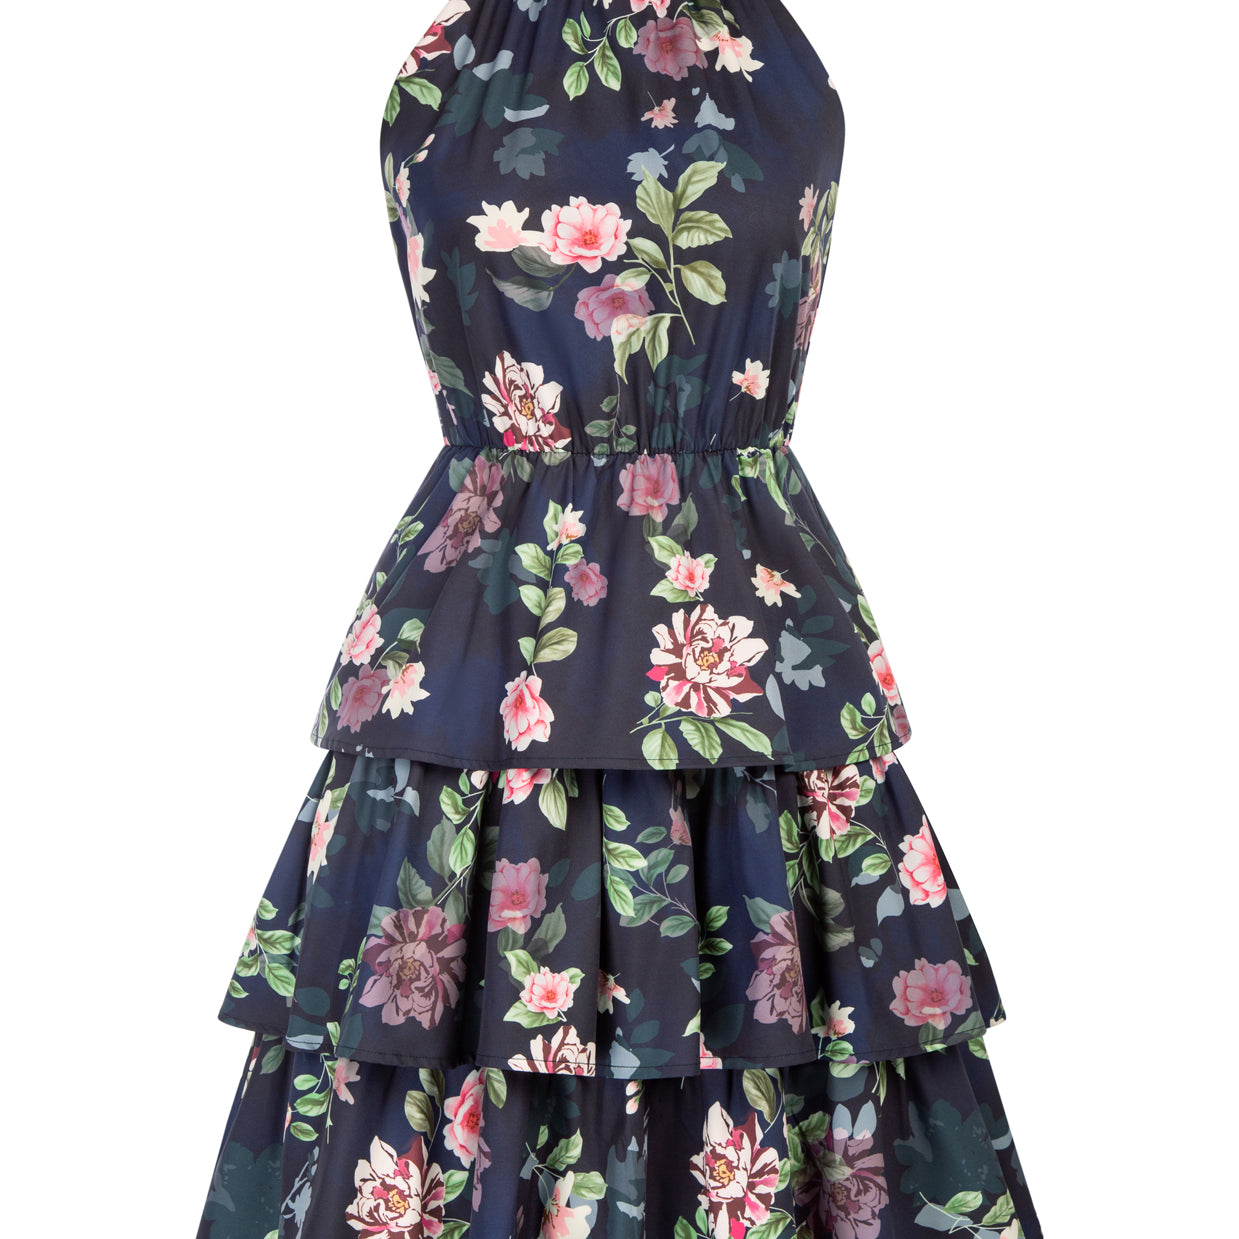 Seckill Offer⌛Strawberry Printed Elastic Waist Cake Dress Sleeveless Halterneck 3-Layer A-Line Dress